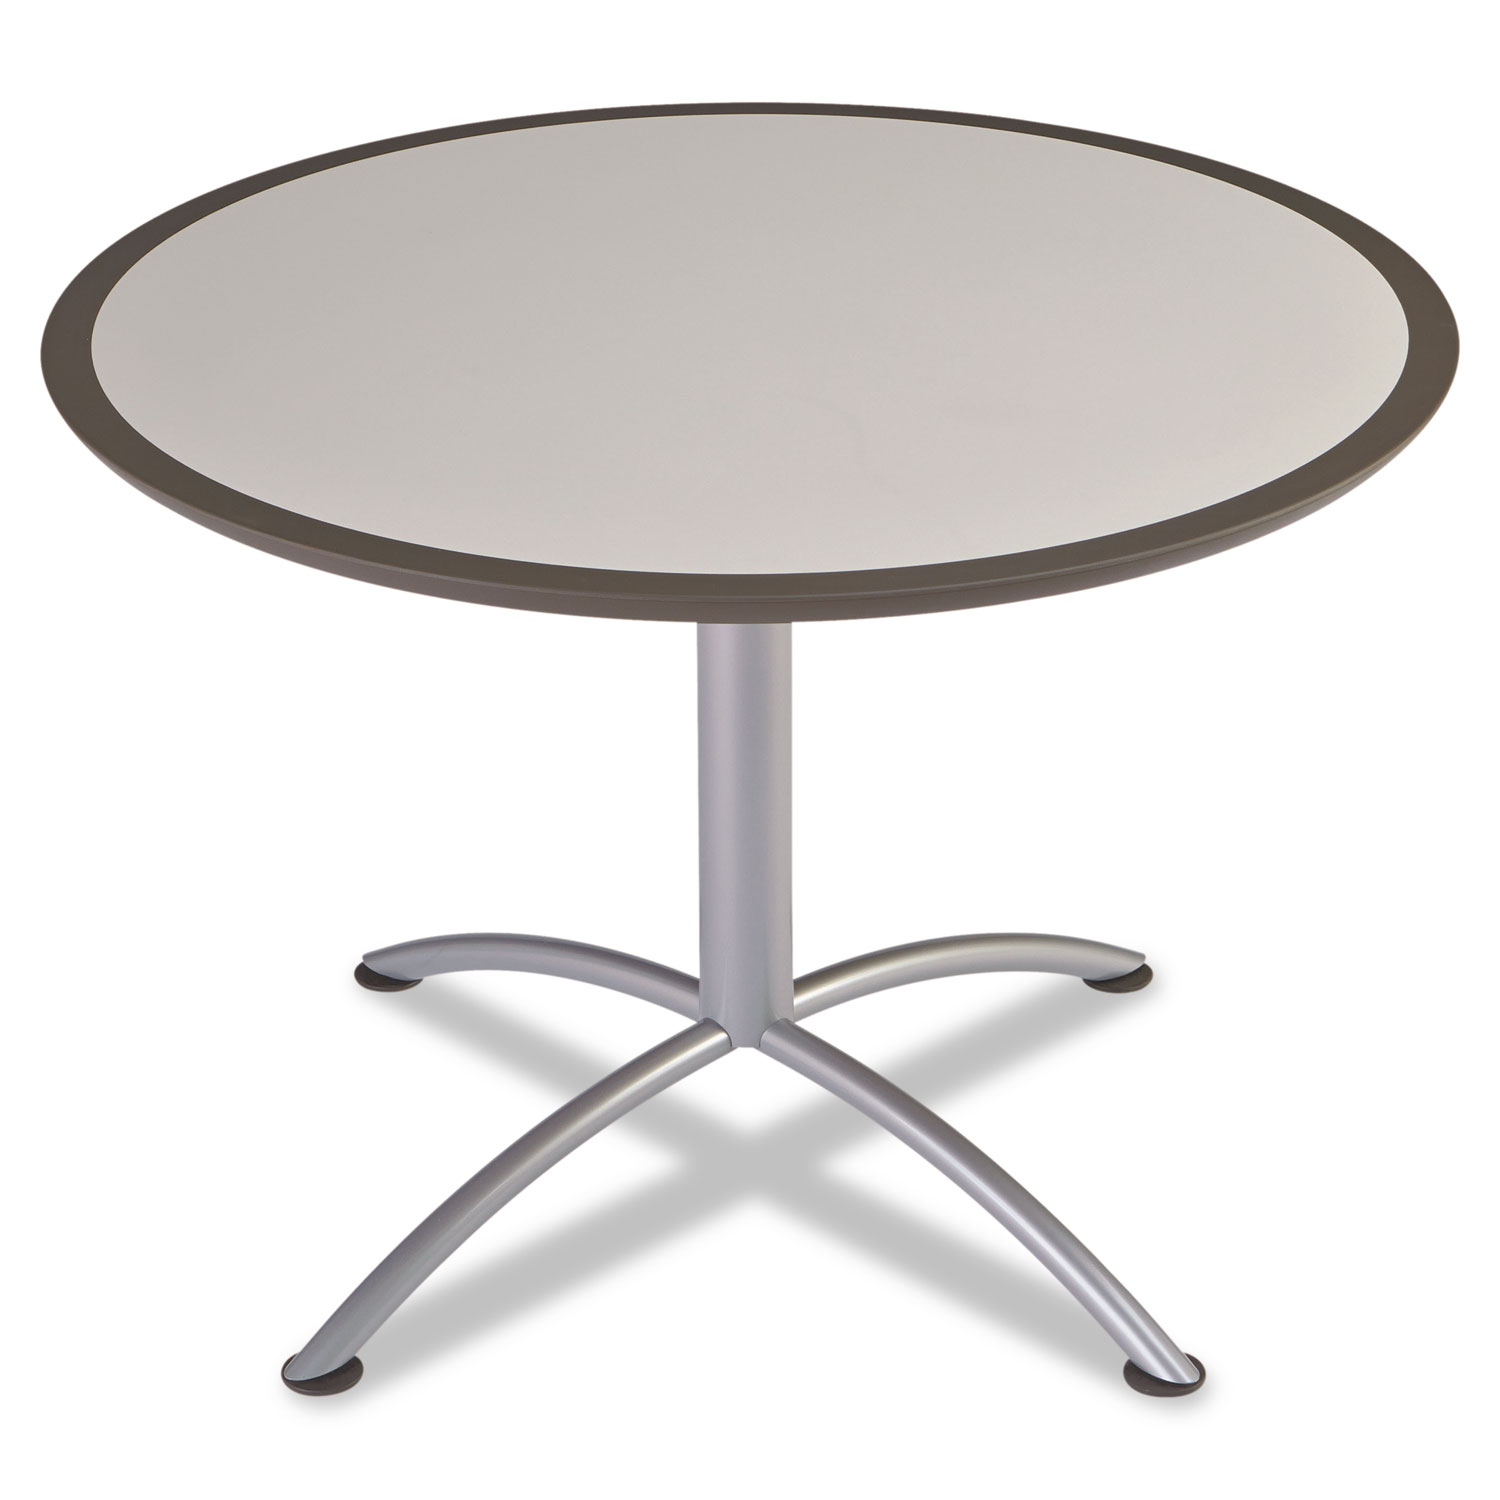 iLand Table, Dura Edge, Round Seated Style, 42 dia x 29h, Gray/Silver